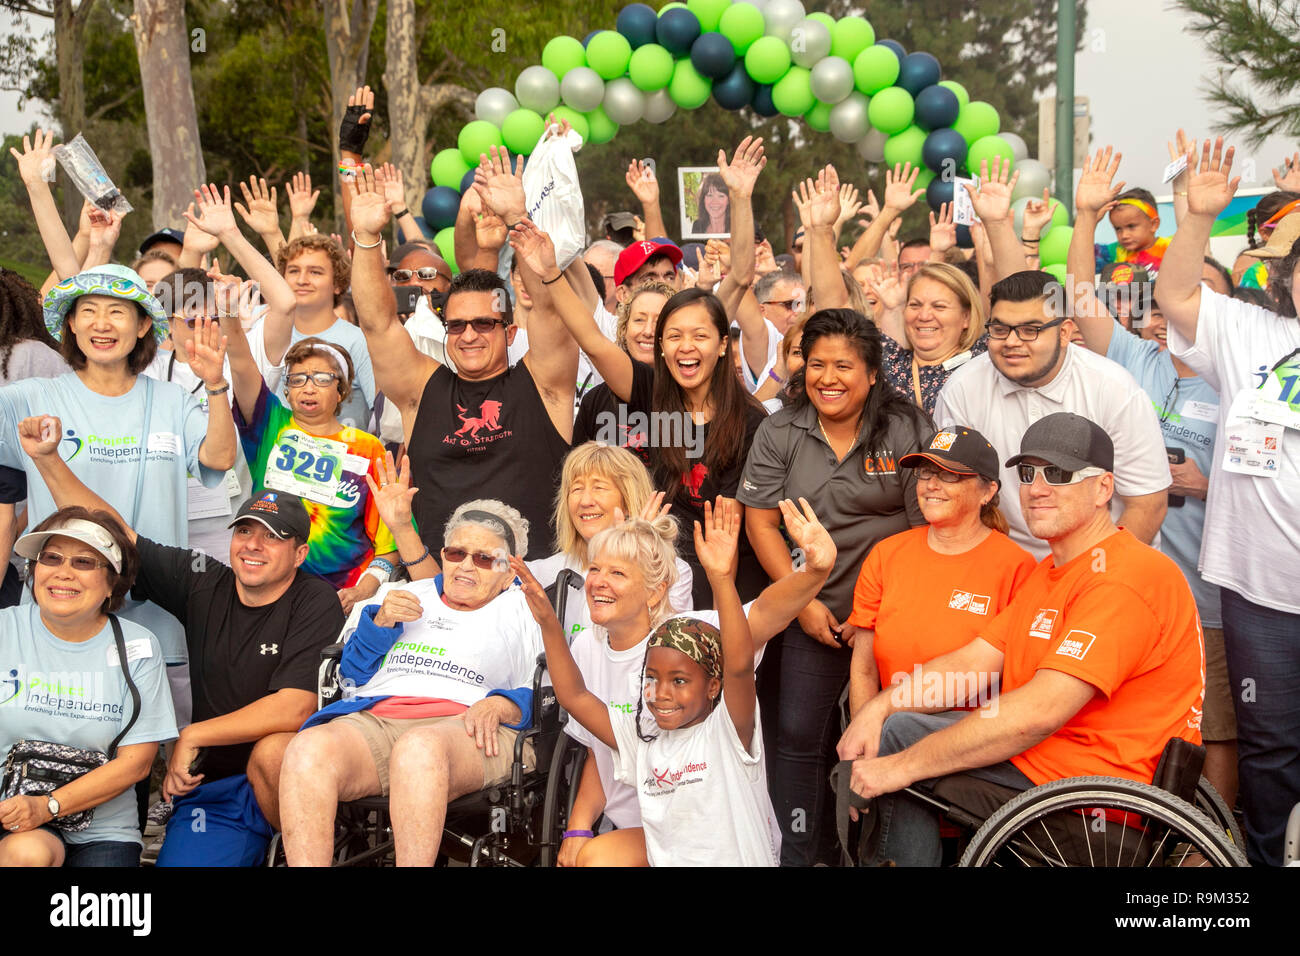 Behinderte marchers Jubeln am Anfang eines Fundraising Charity Veranstaltung in Costa Mesa, CA, Park. Stockfoto